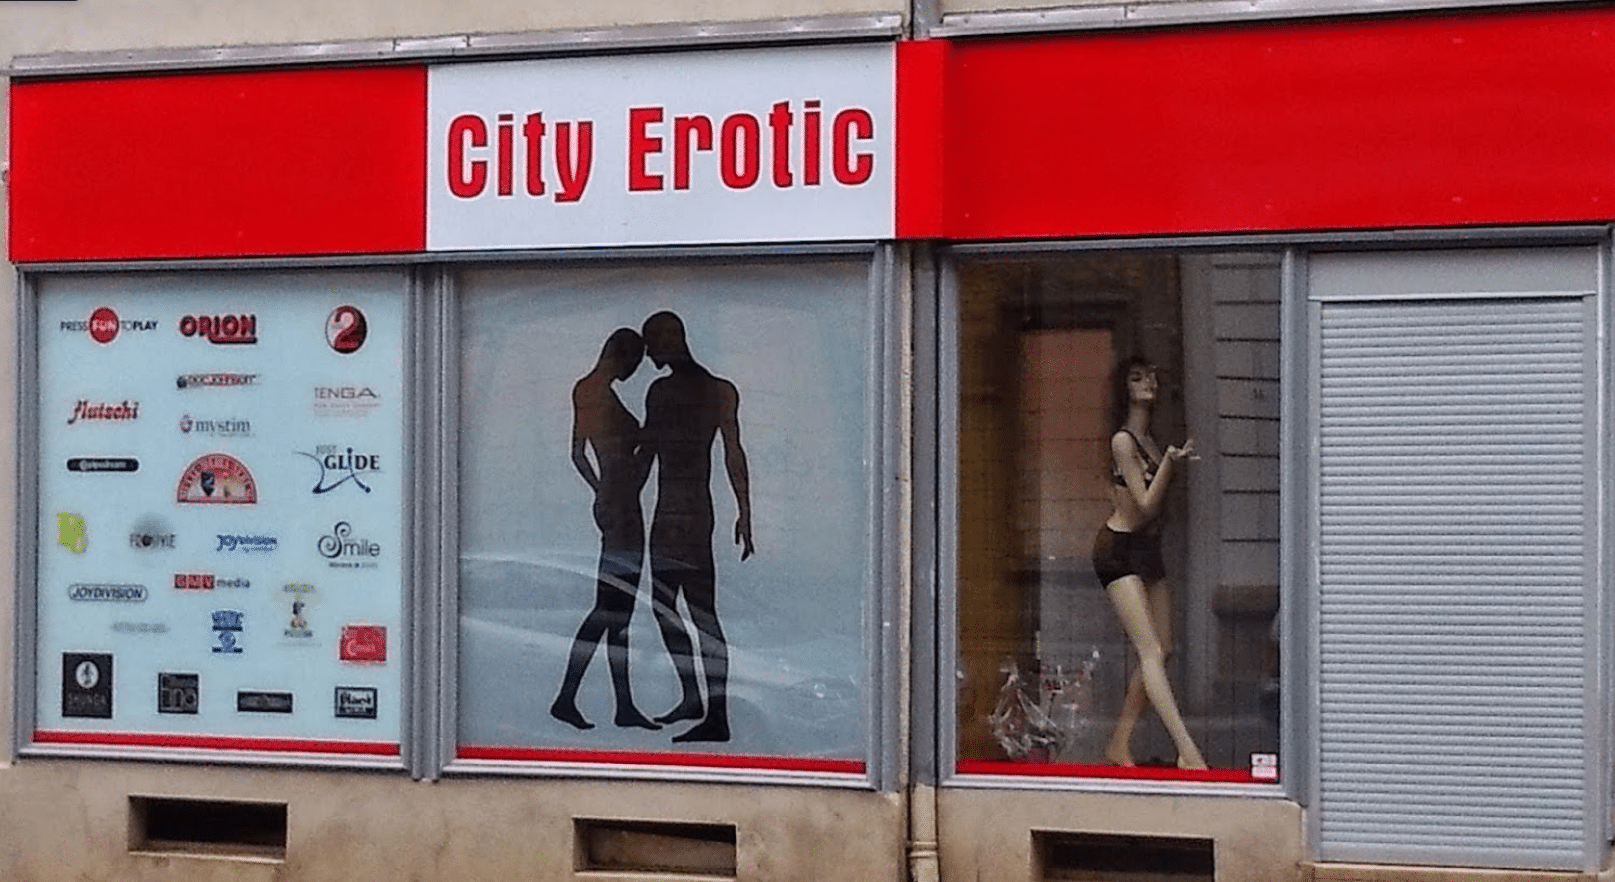 City Erotic Chemnitz